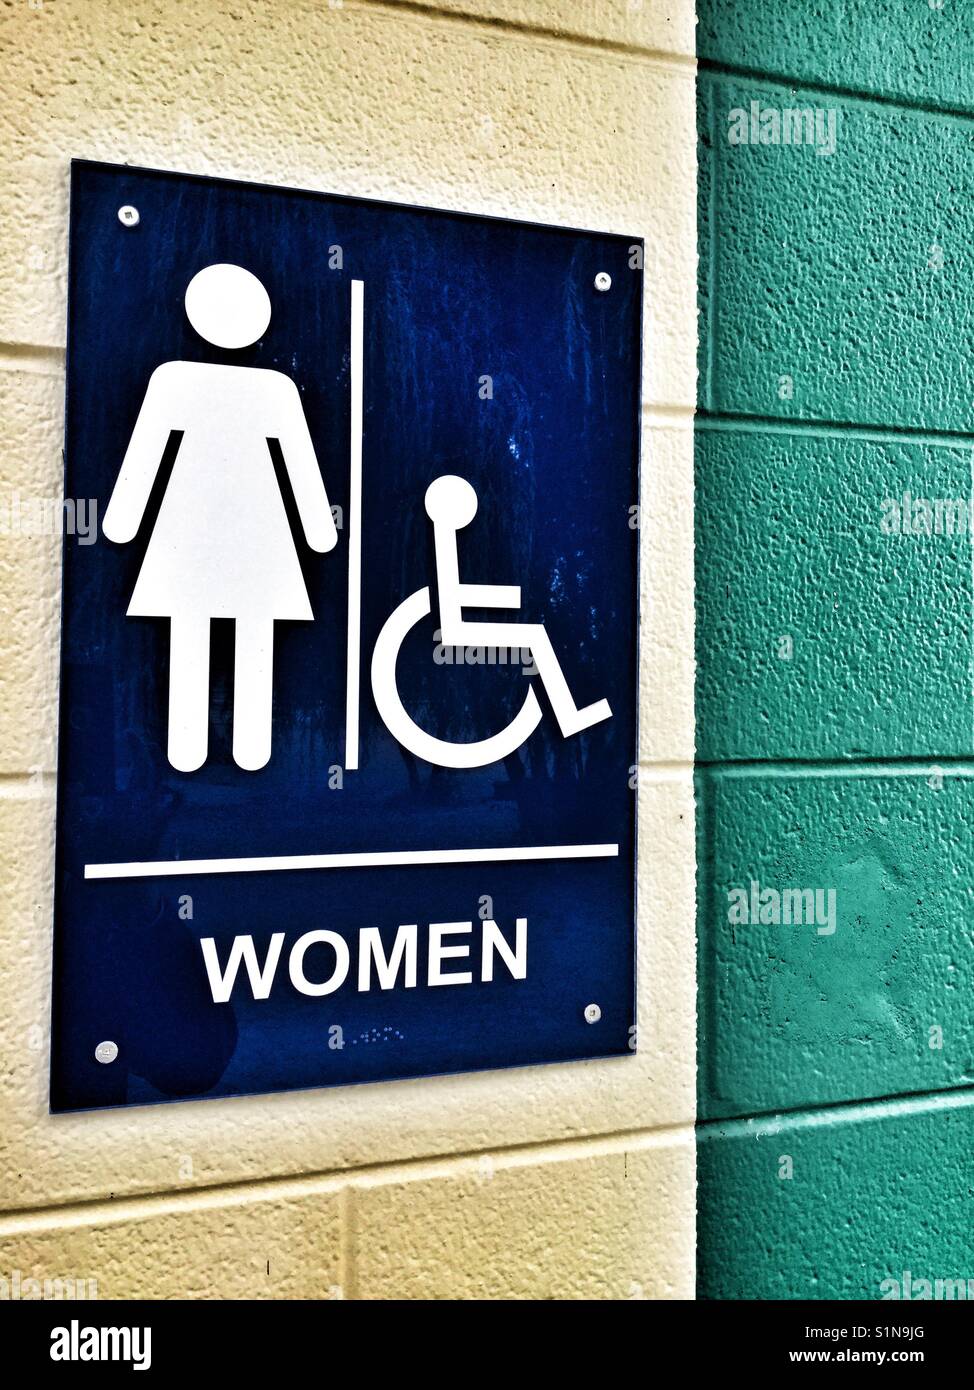 Women's washroom sign. Stock Photo